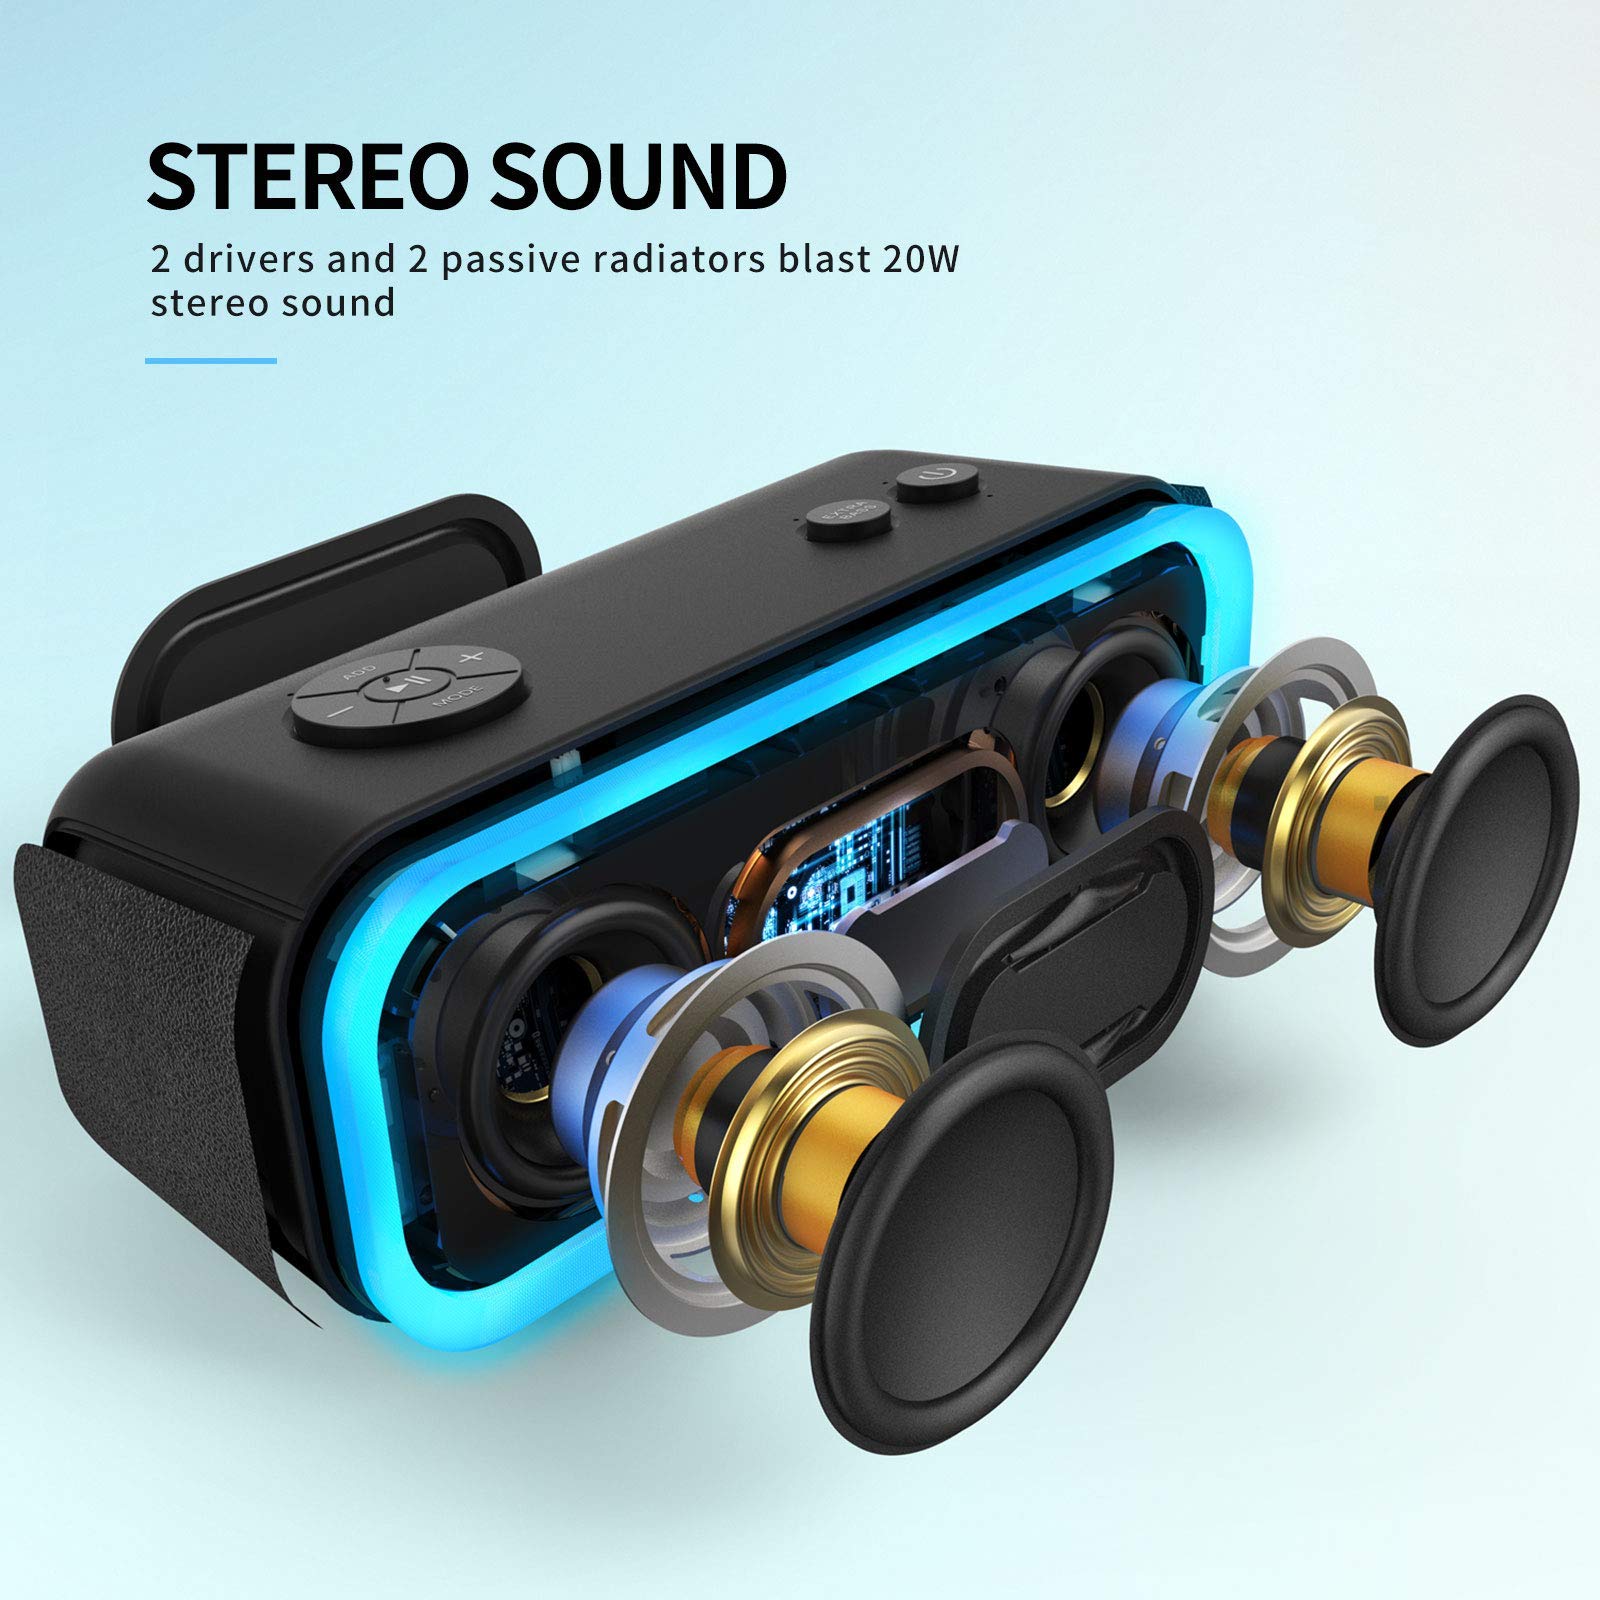 DOSS SoundBox Pro Bluetooth Speaker Bundle E-go II Portable Bluetooth Speaker